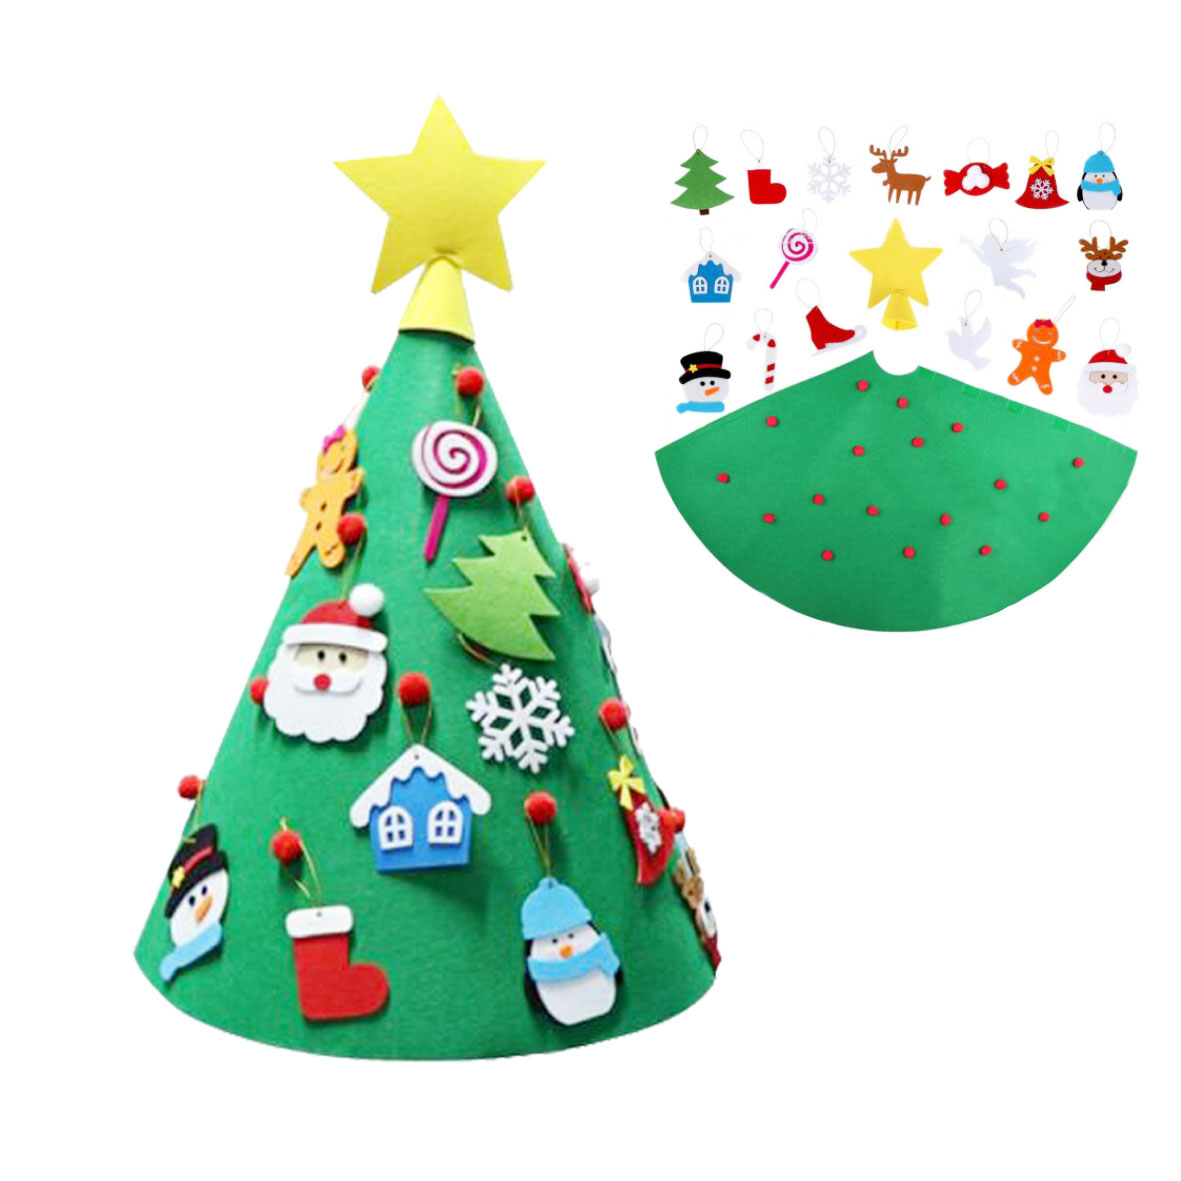 GL-AAA1346 27.5inch Tall 3D DIY Felt Christmas Tree for Toddler Kids